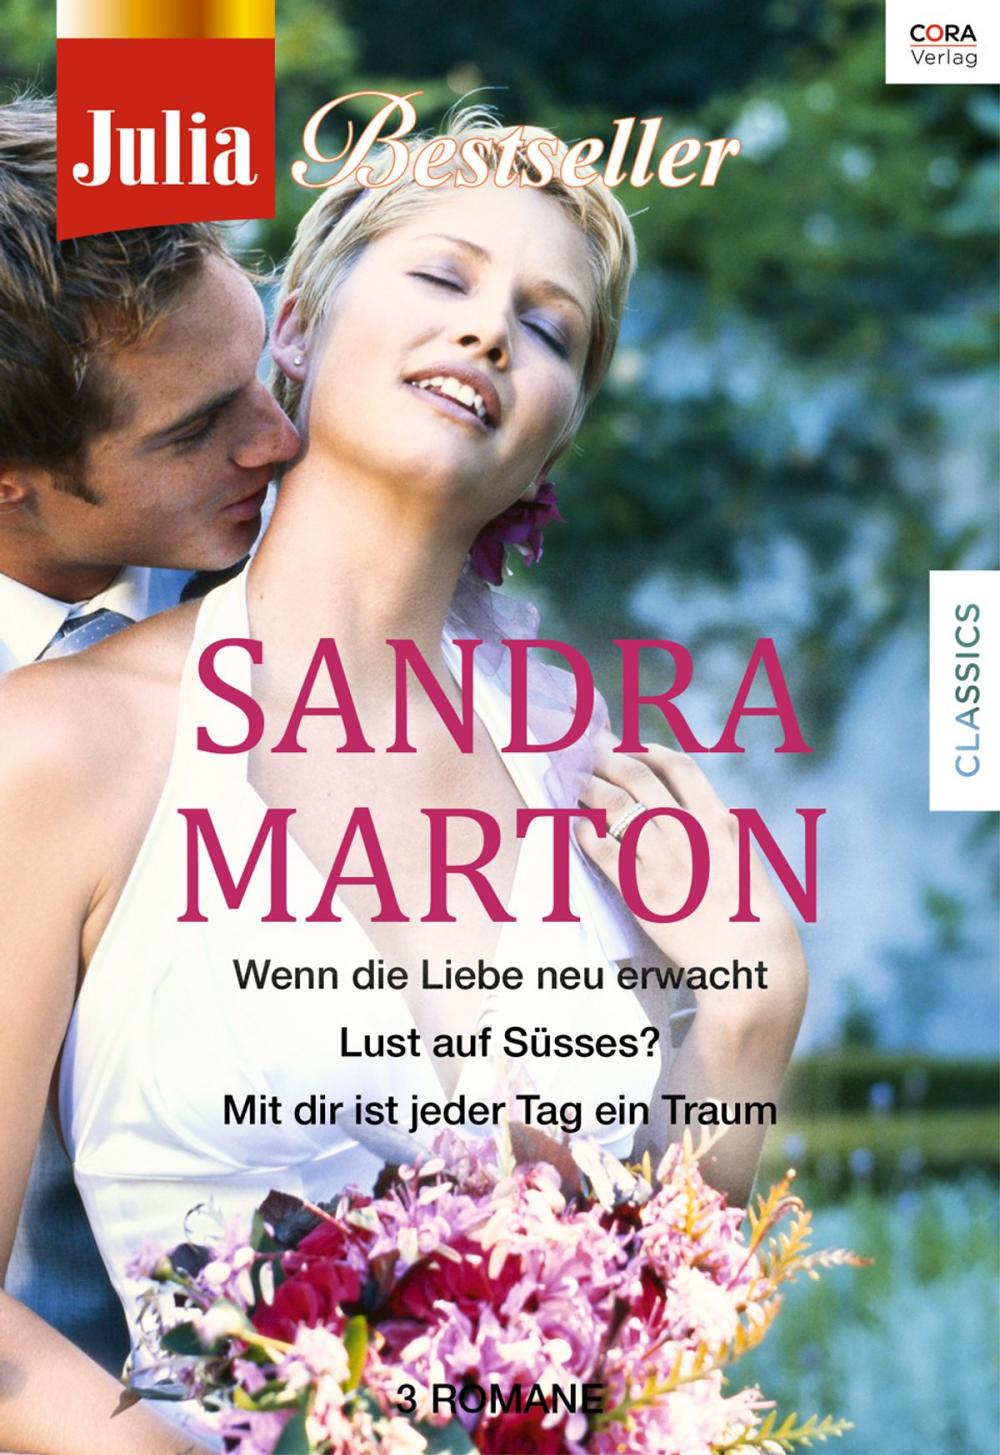 Big bigCover of Julia Bestseller - Sandra Marton